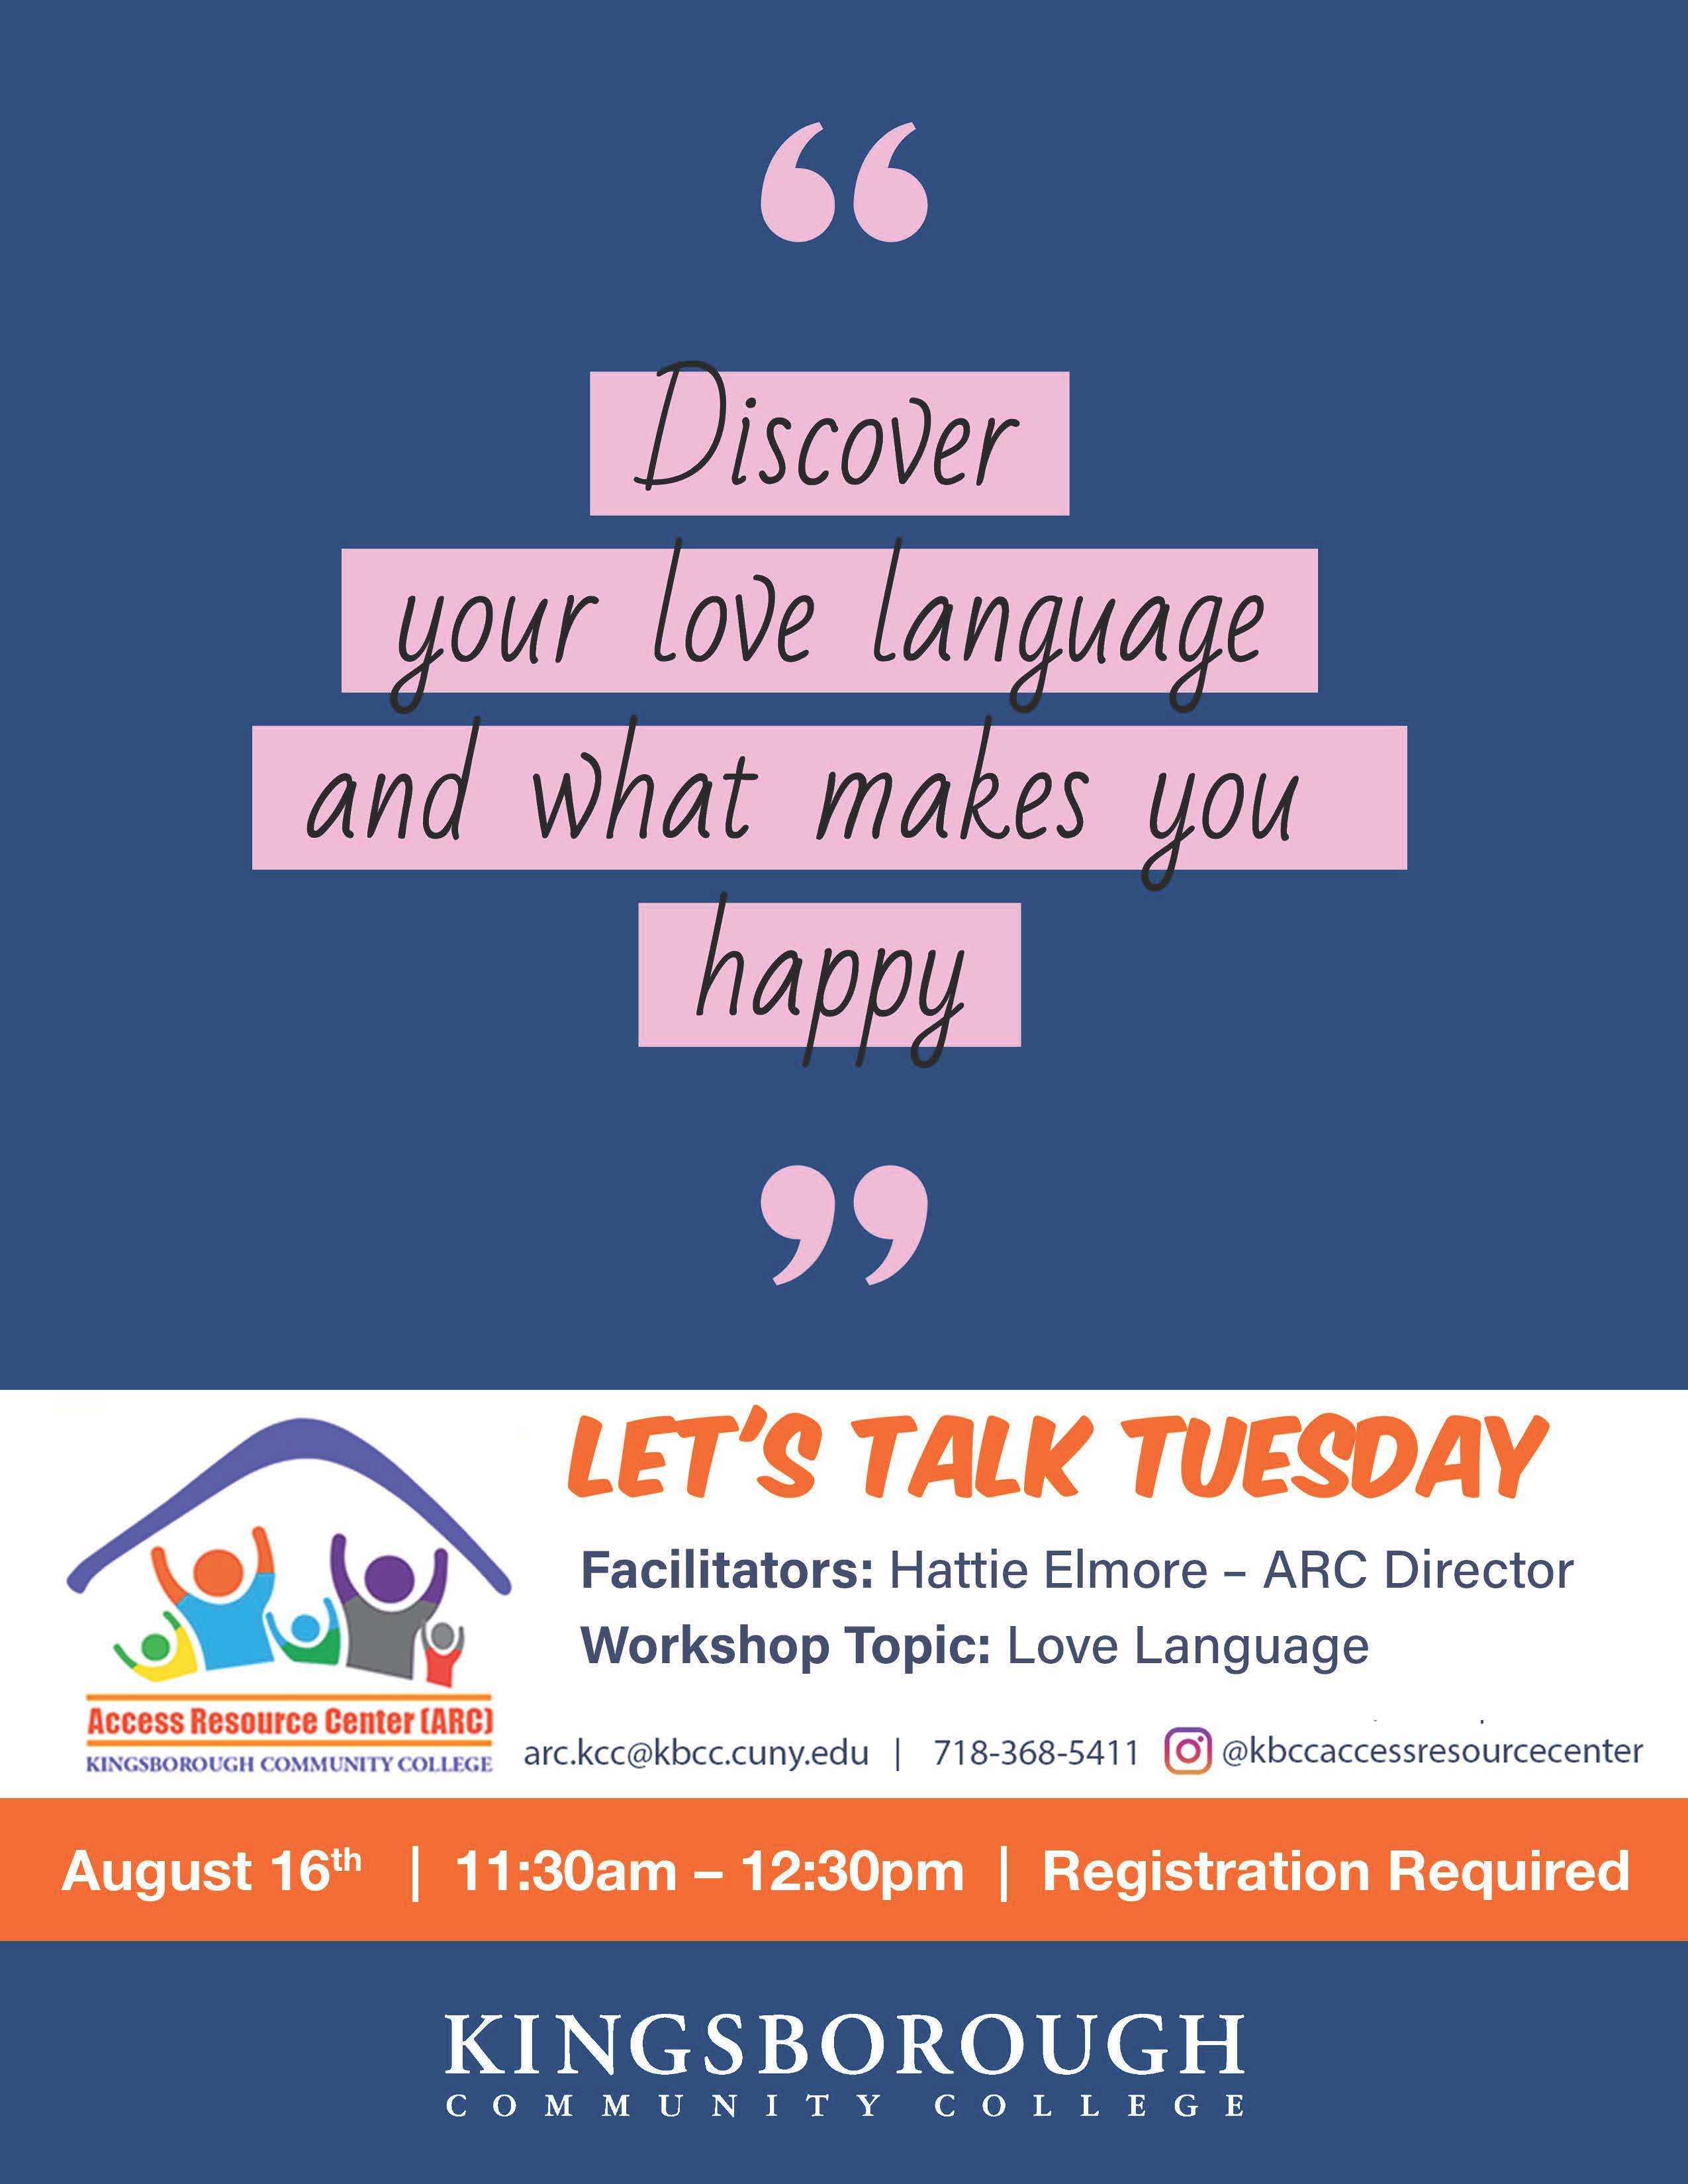 Workshop Topic: Let's Talk Tuesdays - Love Language